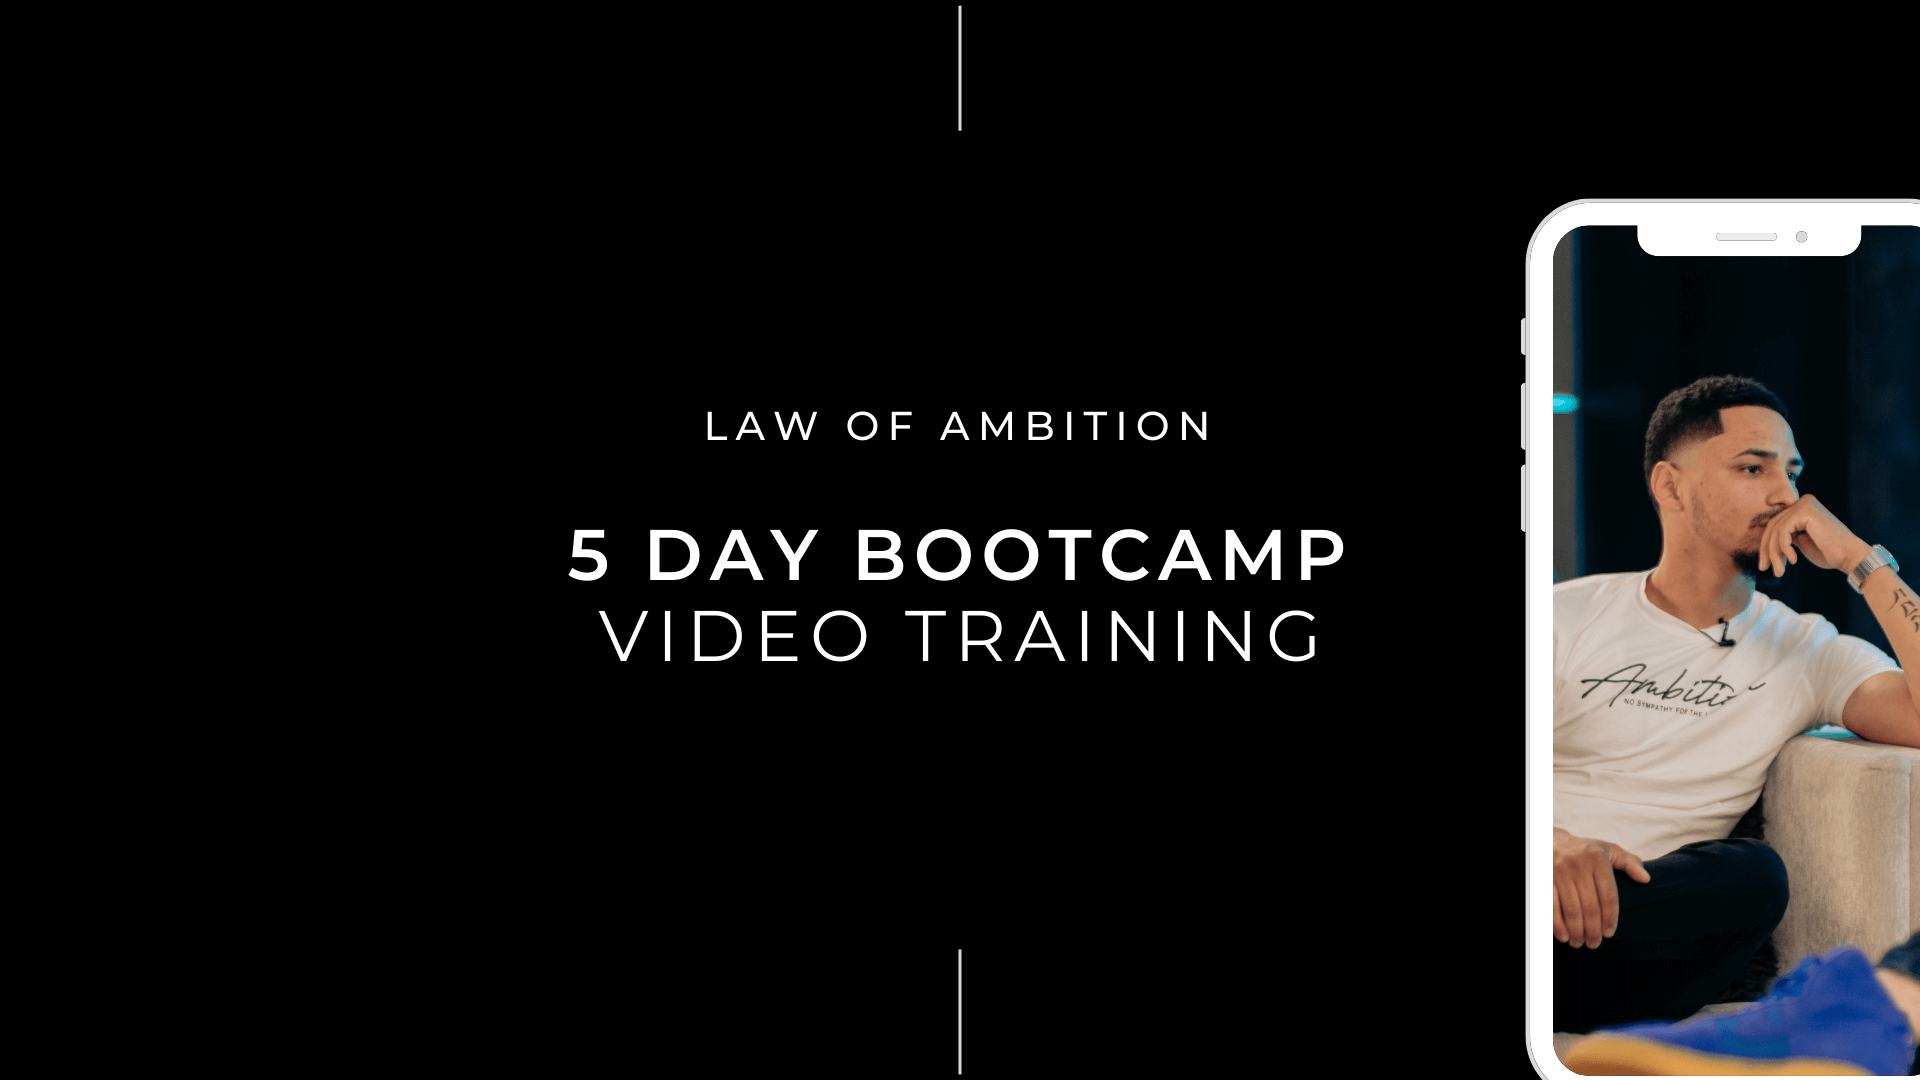 Bootcamp Video Training